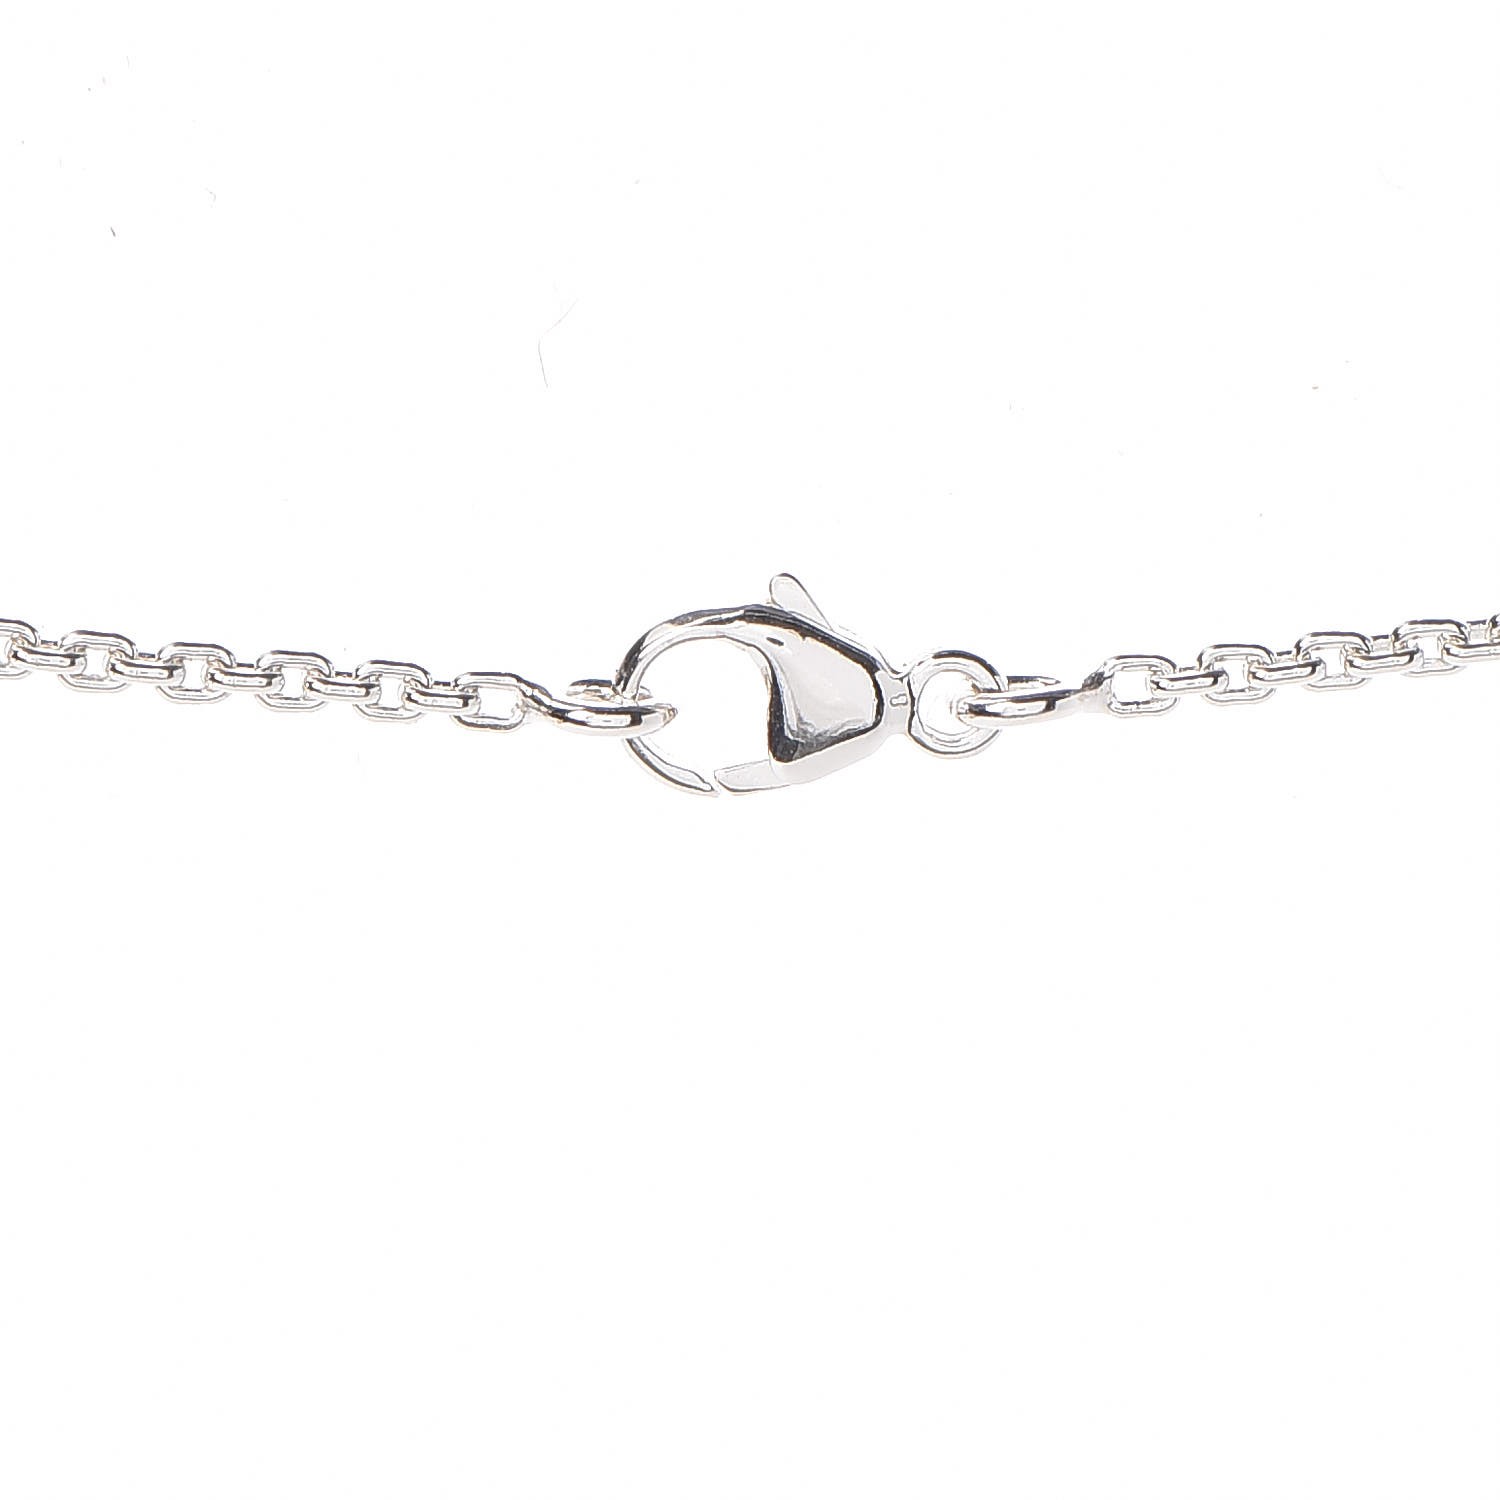 Shop Louis Vuitton Silver lockit pendant, sterling silver (Q93559